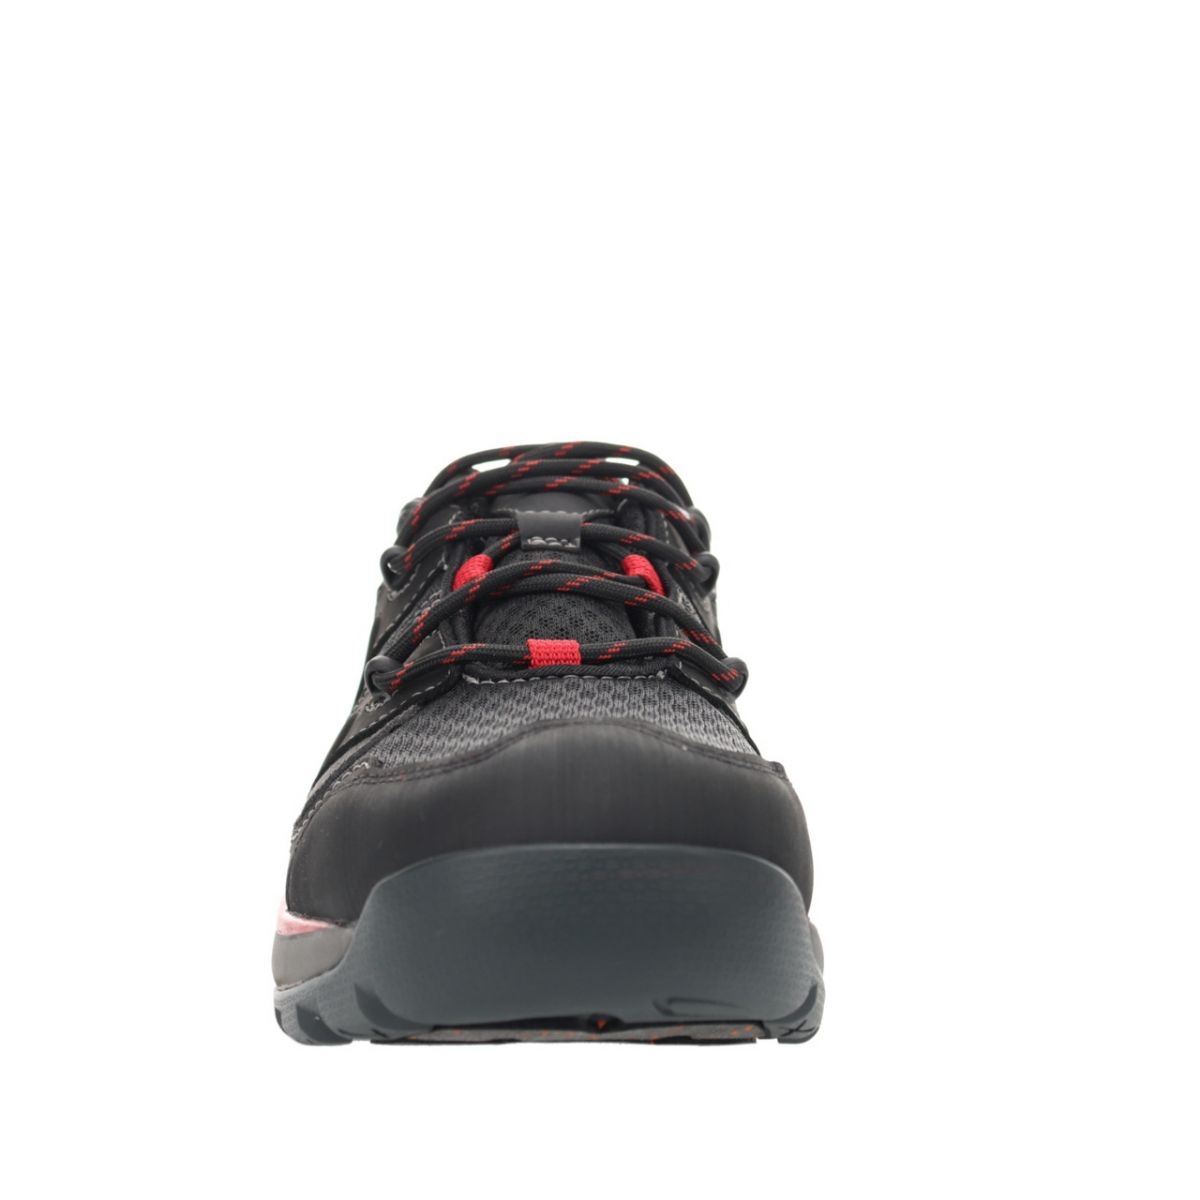 Propet Men's Vercors Hiking Shoe Black/Red - MOA002SBRD BLACK/RED - BLACK/RED, 11.5 X-Wide